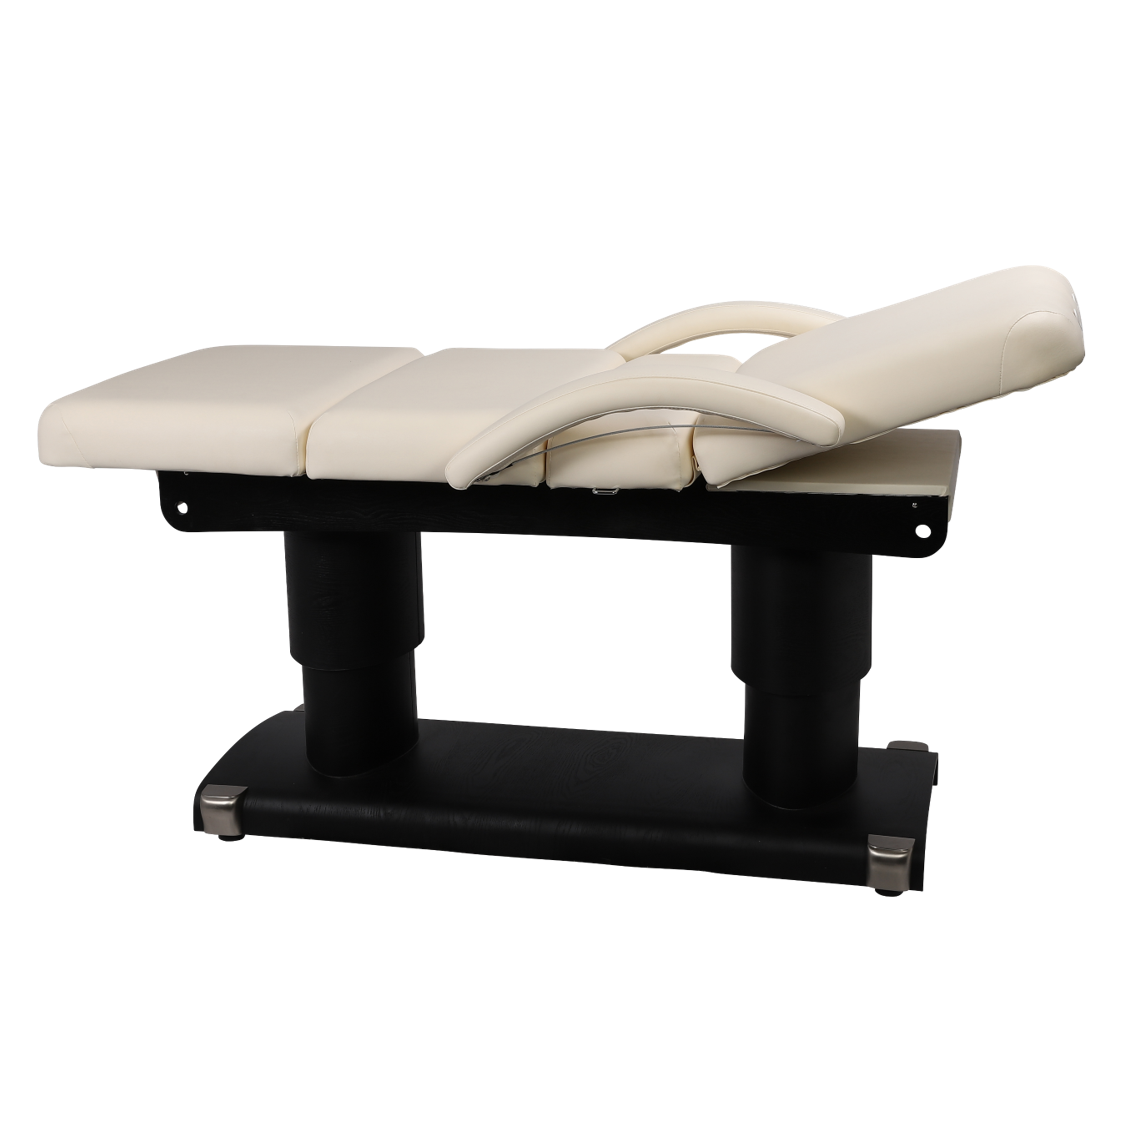 Laguna Spa Treatment Table - Garfield Commercial Enterprises Salon Equipment Spa Furniture Barber Chair Luxury